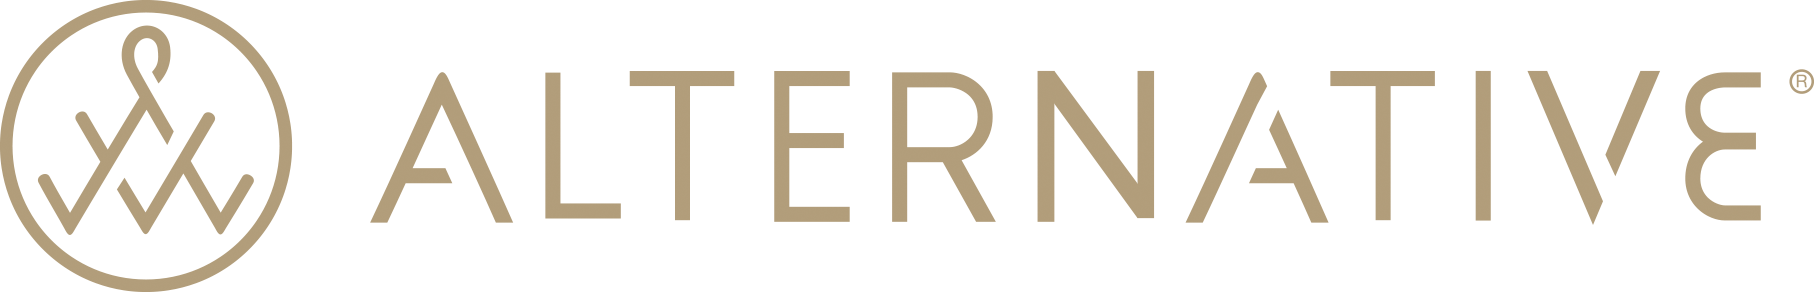 Image of Alternative Apparel logo